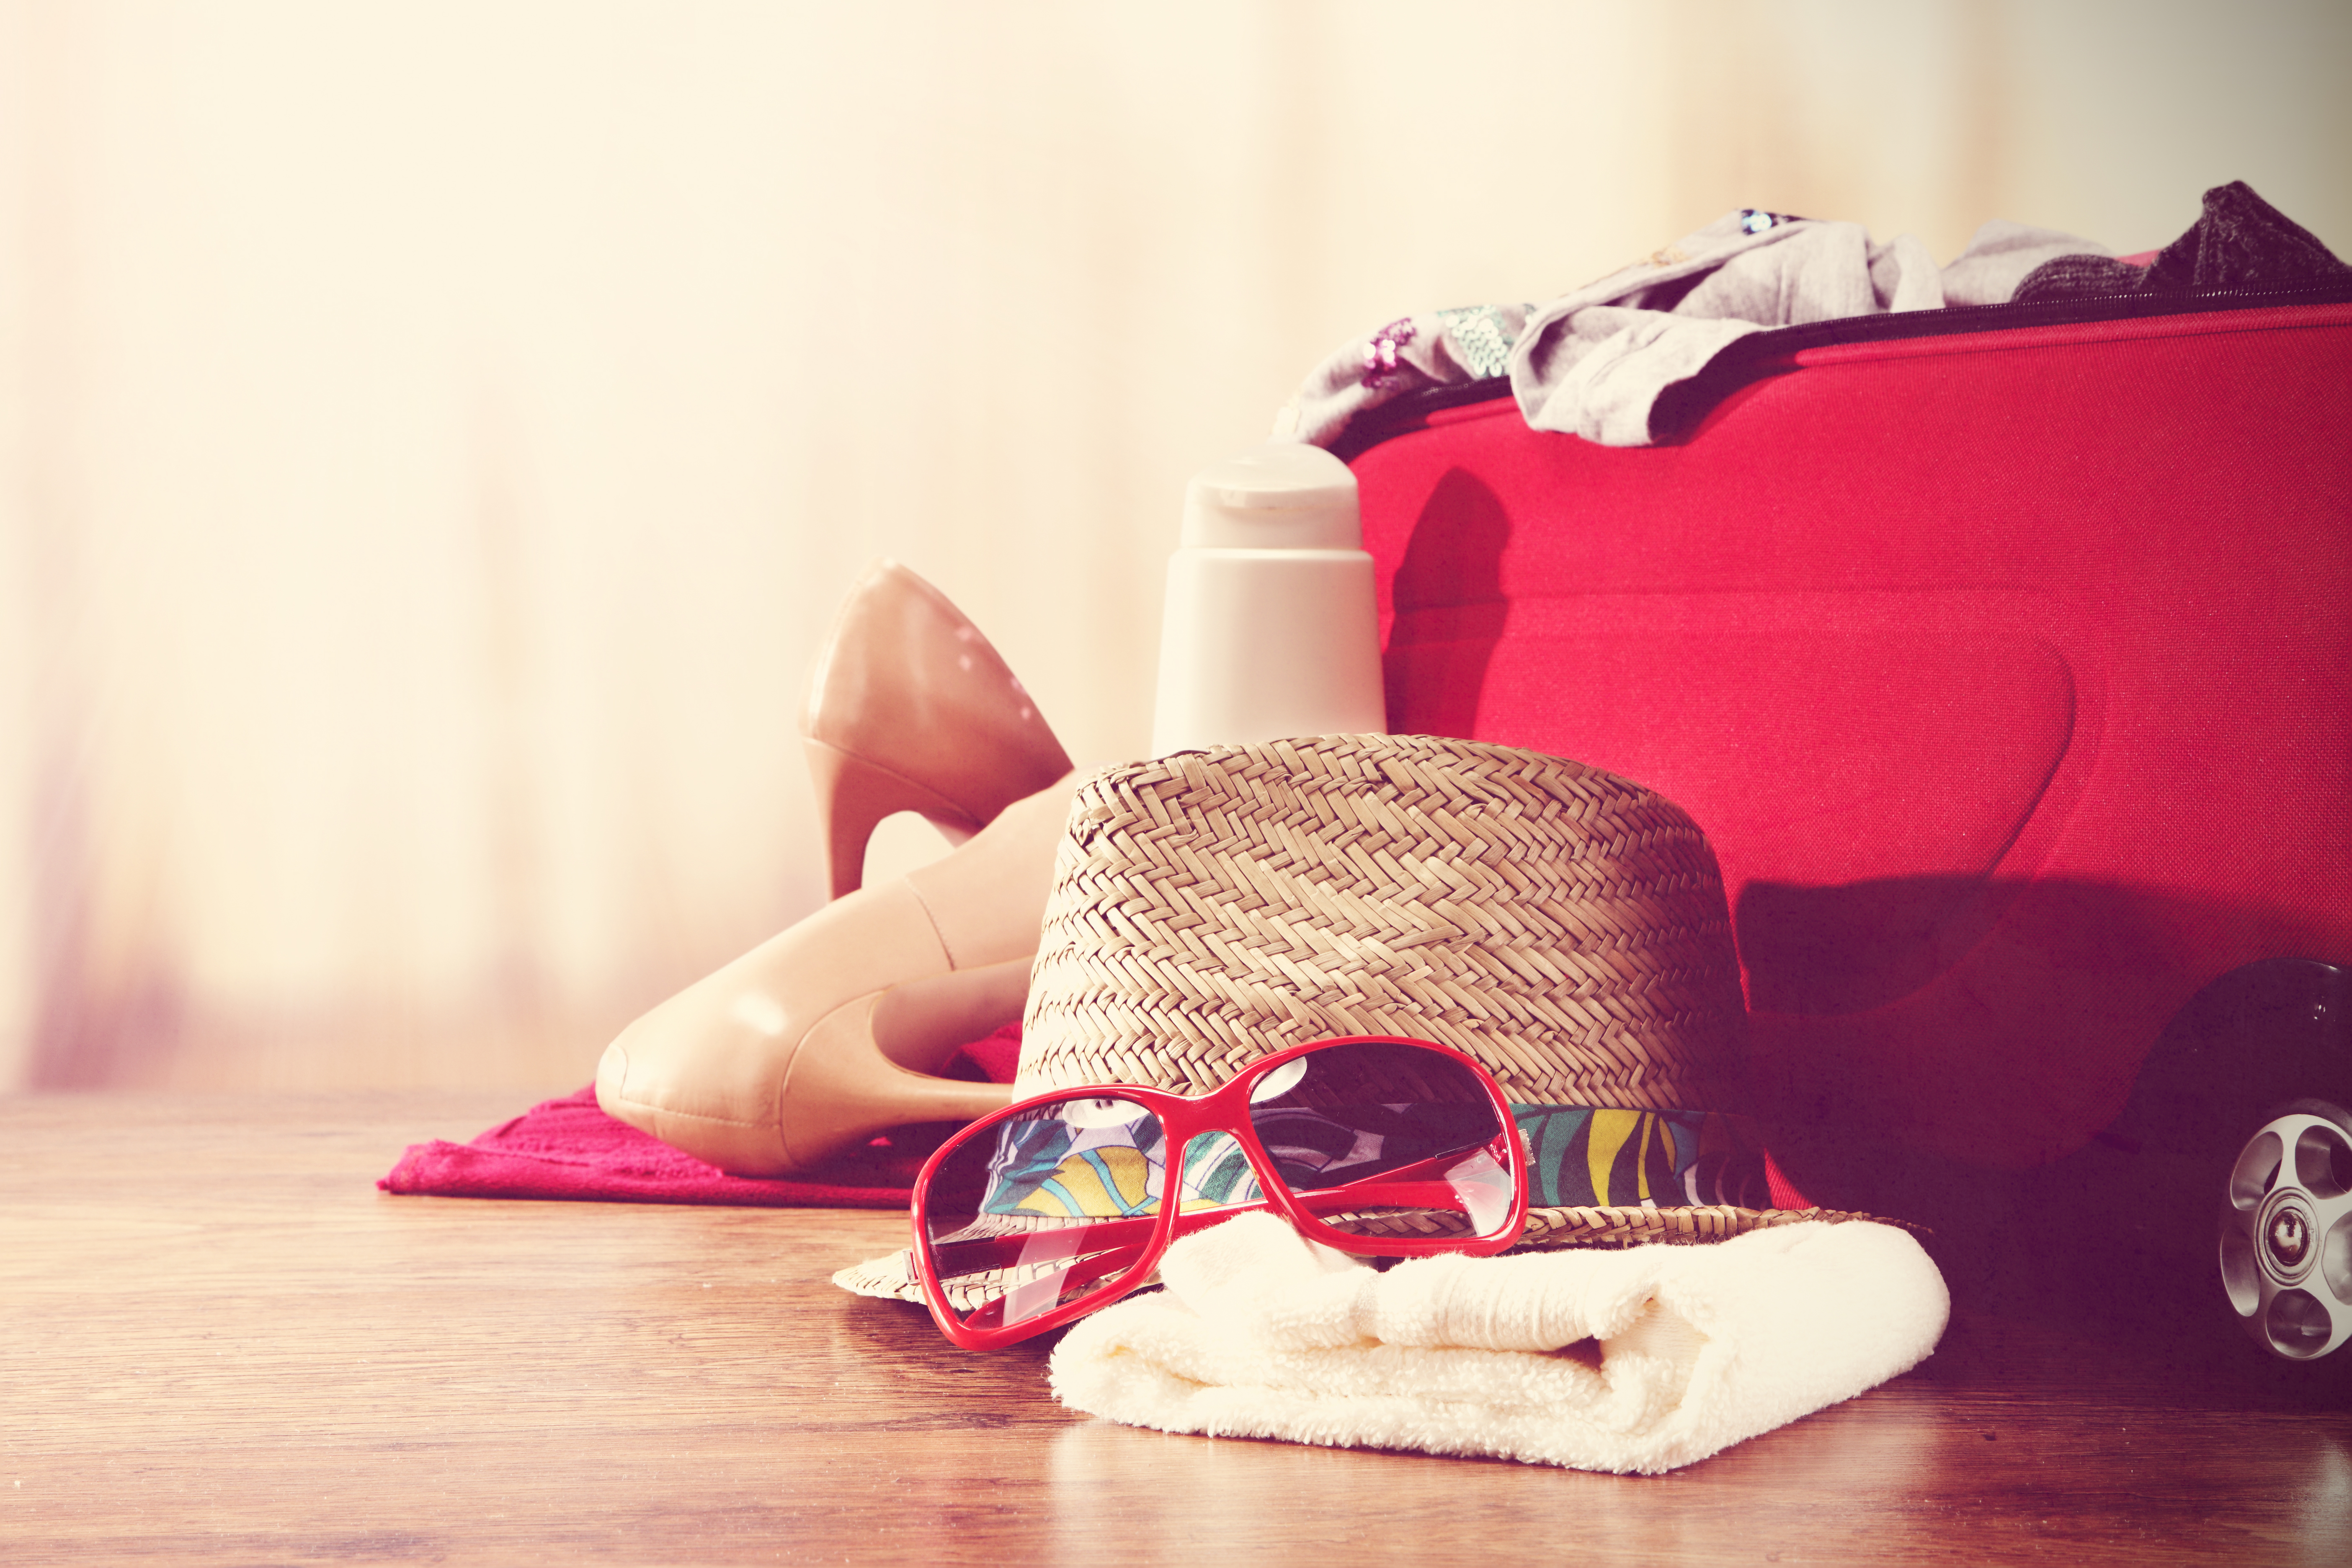 Una maleta siendo empaquetada | Fuente: Shutterstock